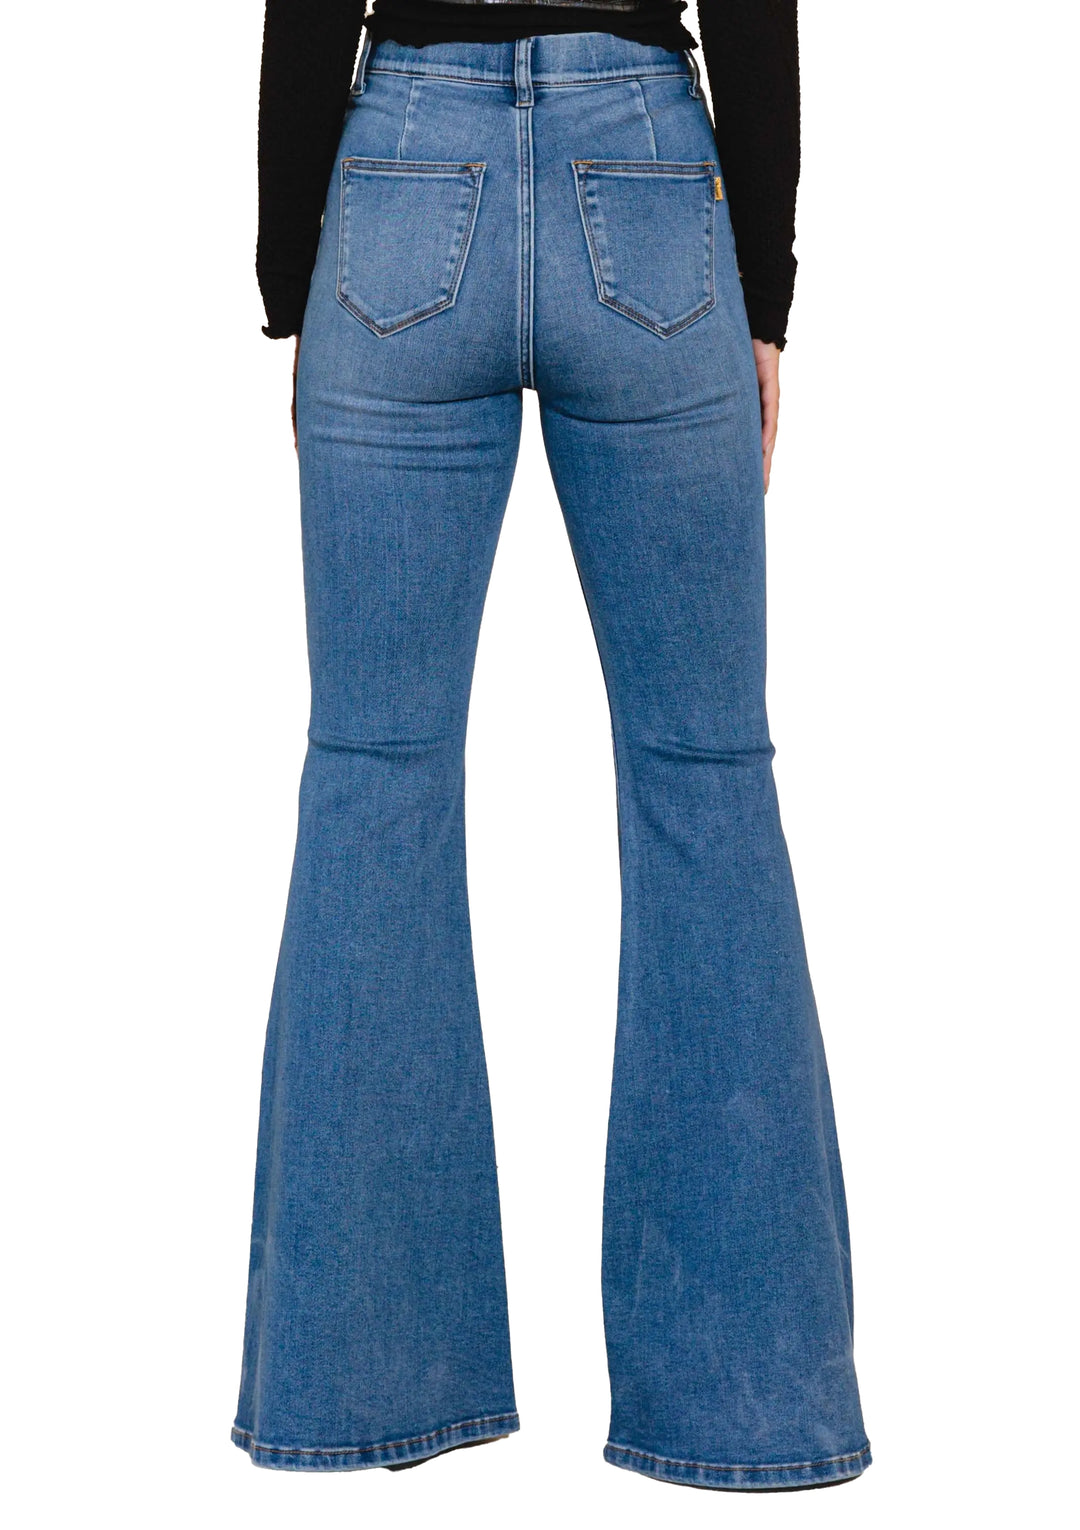 Elastic Waist Flare Denim Jeans (33.5" inseam)